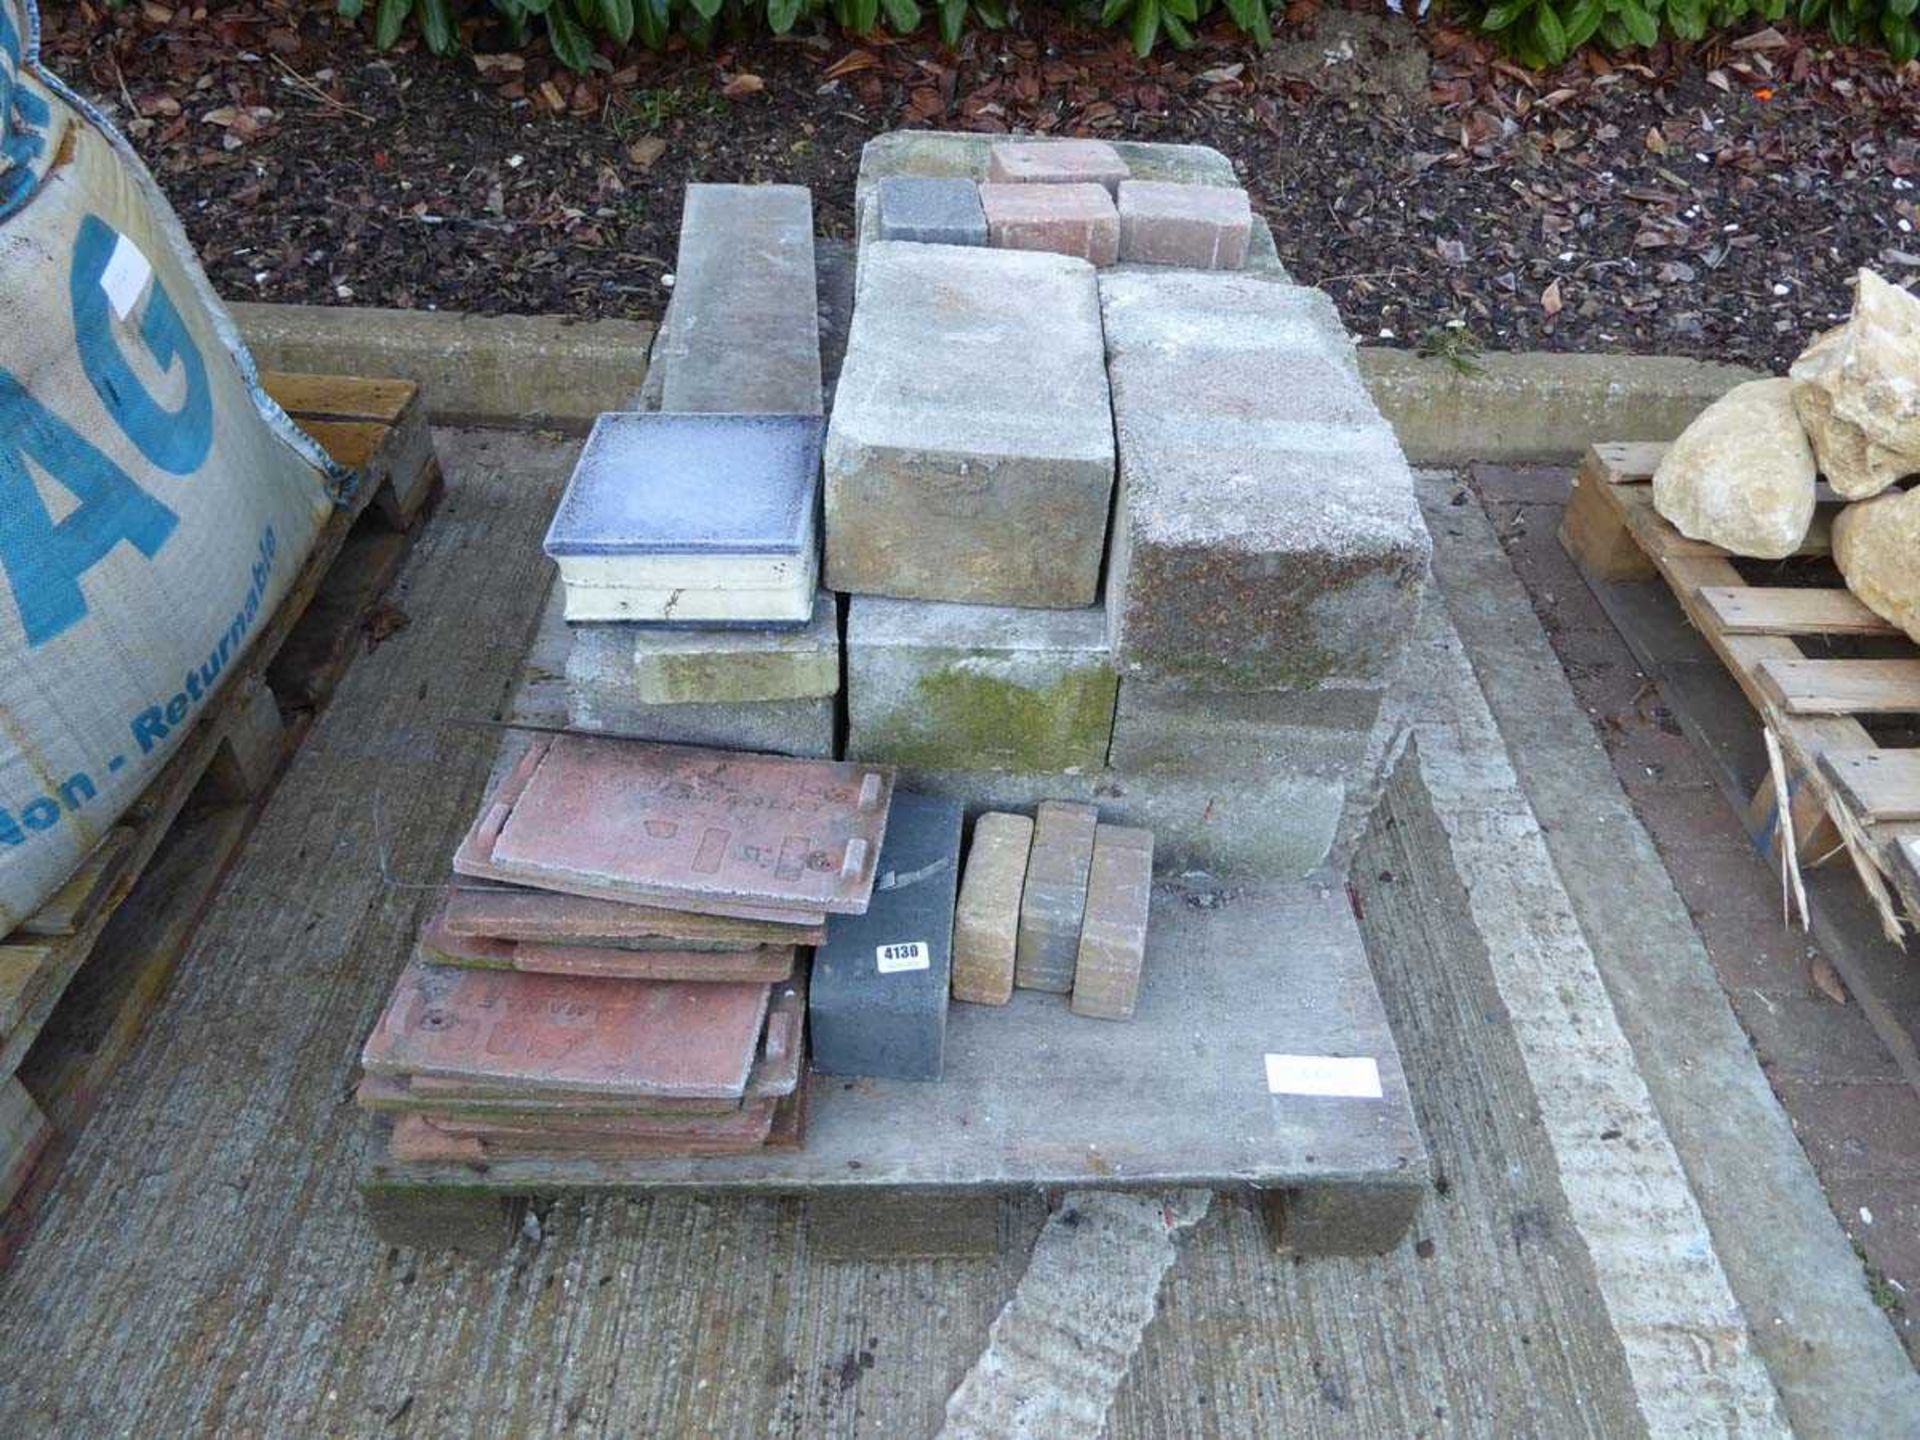 Pallet of various bricks, blocks and tiles